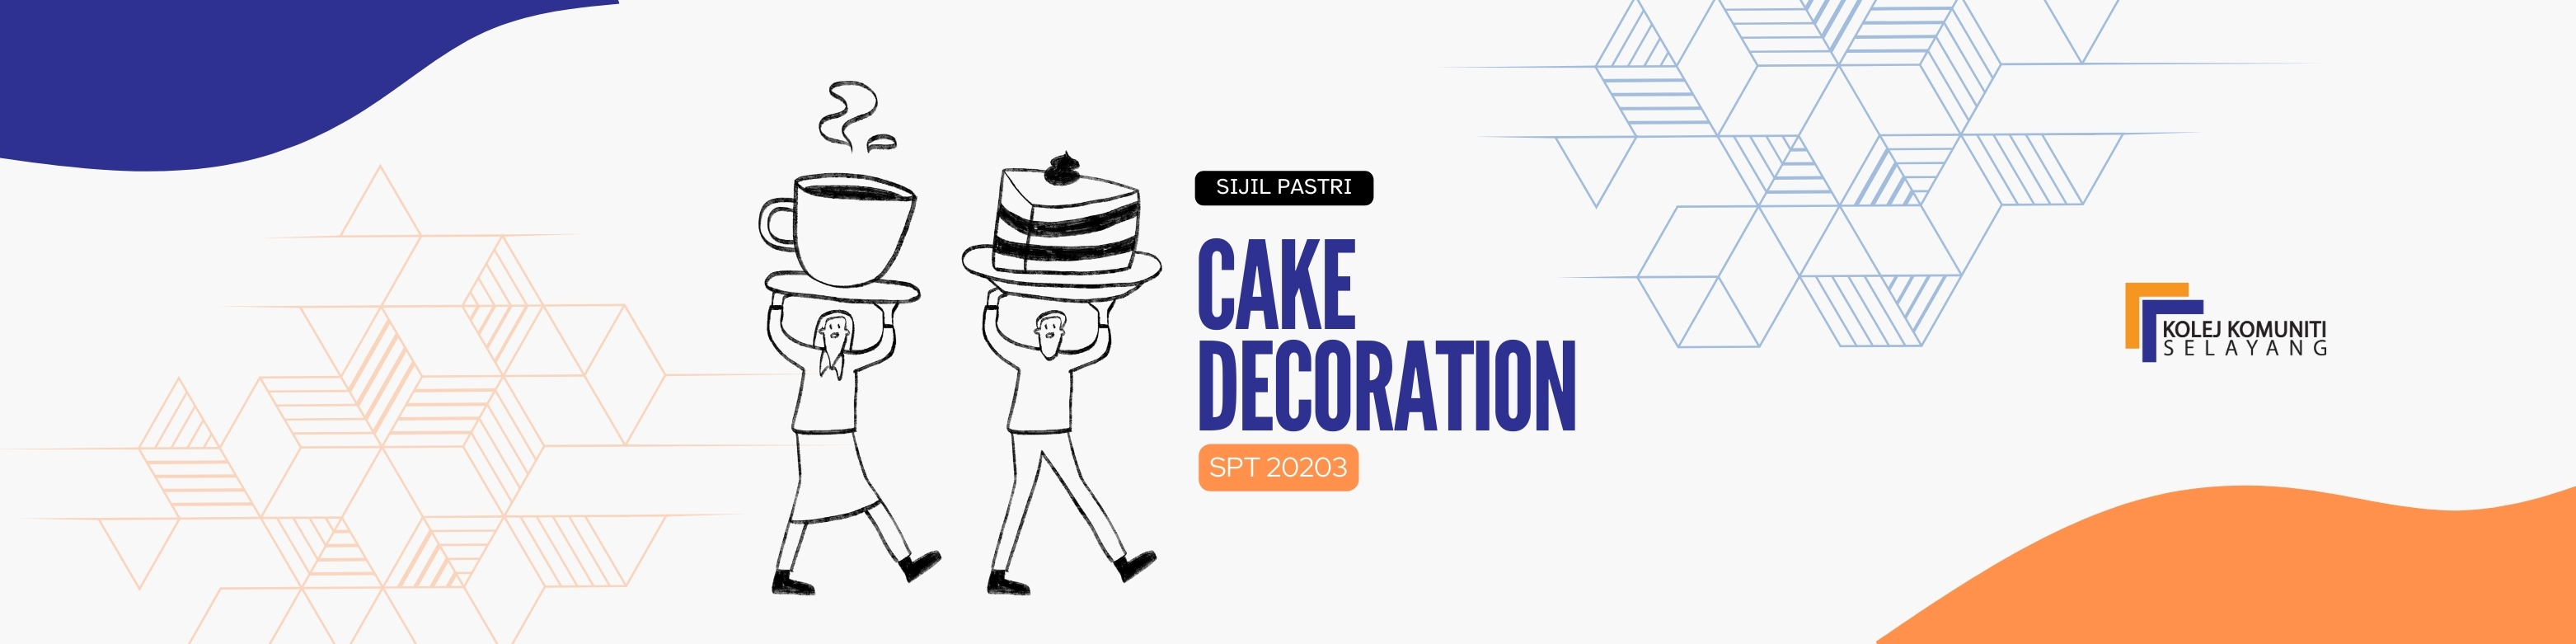 SPT20203 - CAKE DECORATION